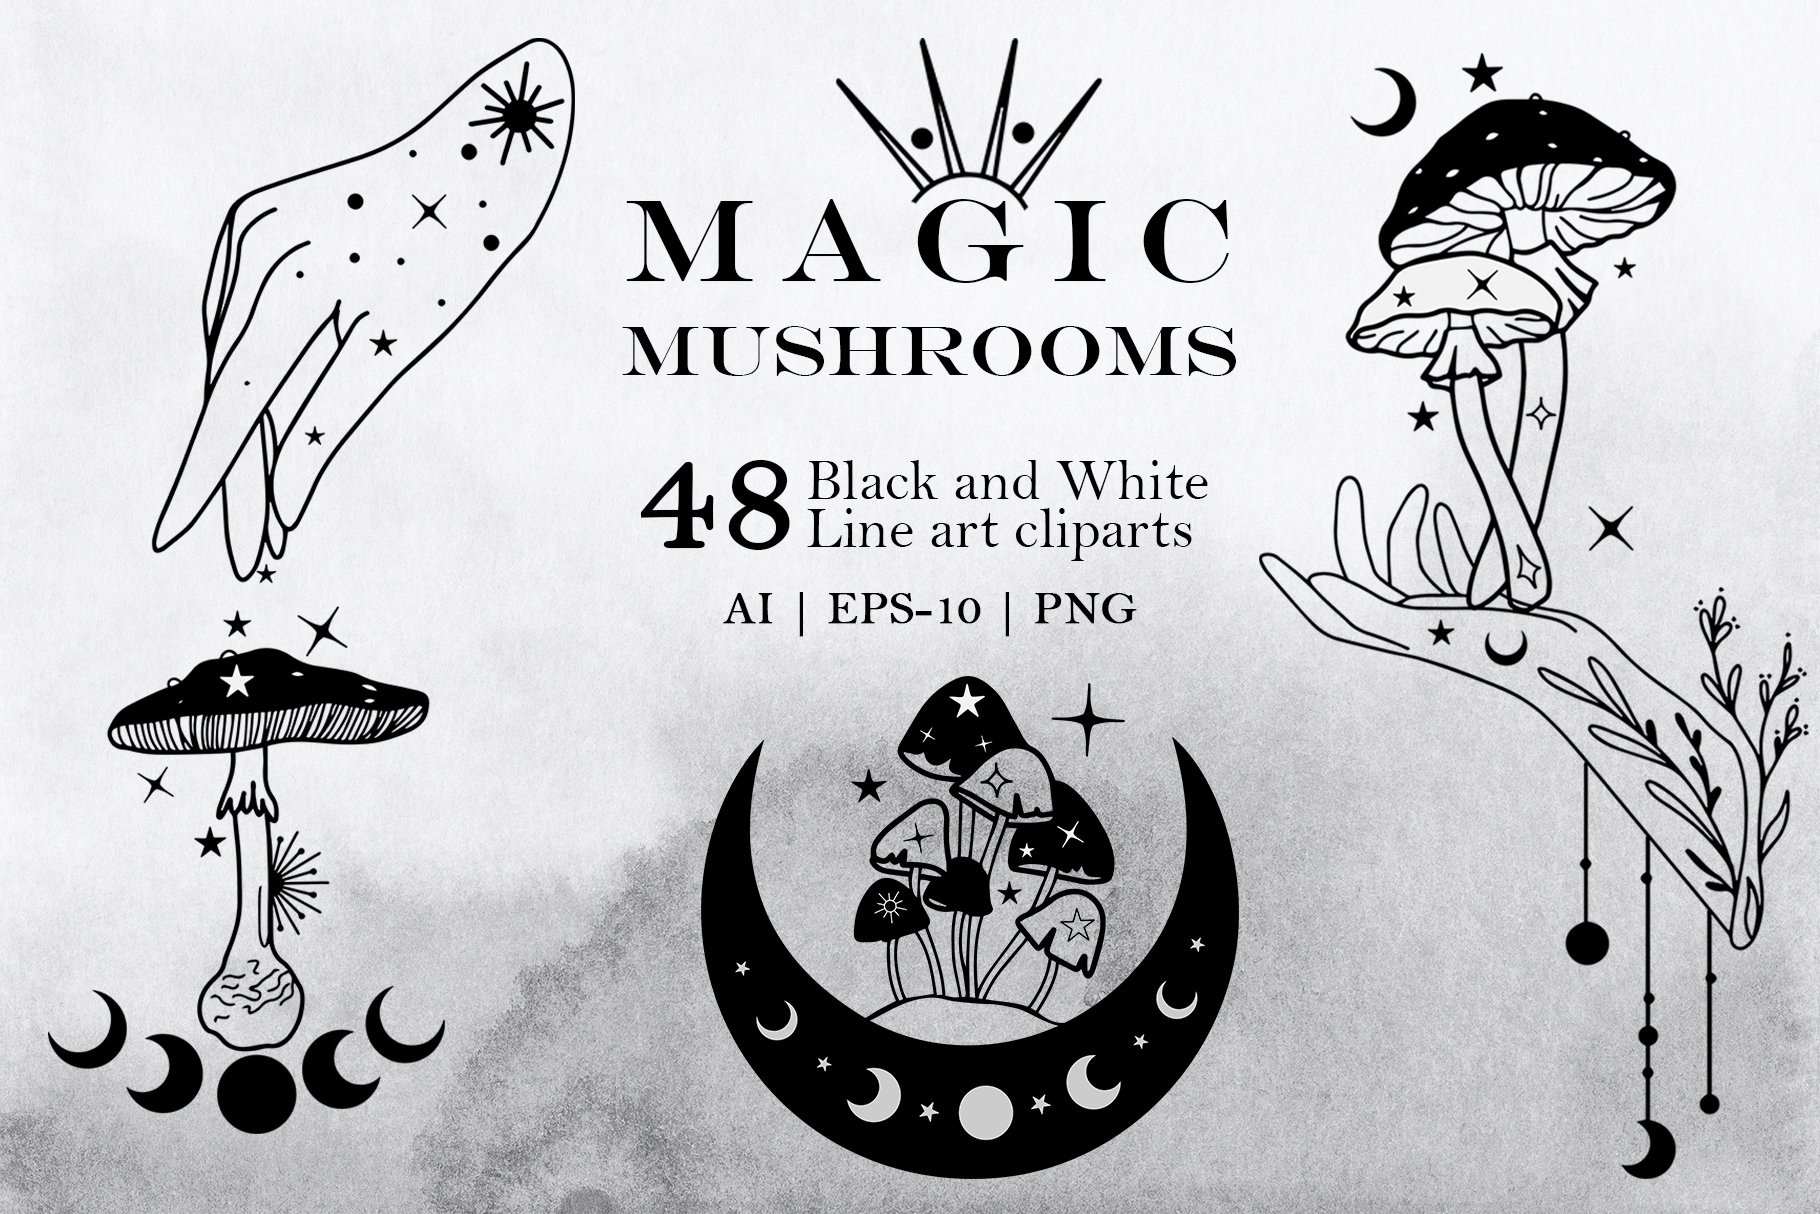 Magic mushrooms line art clipart cover image.